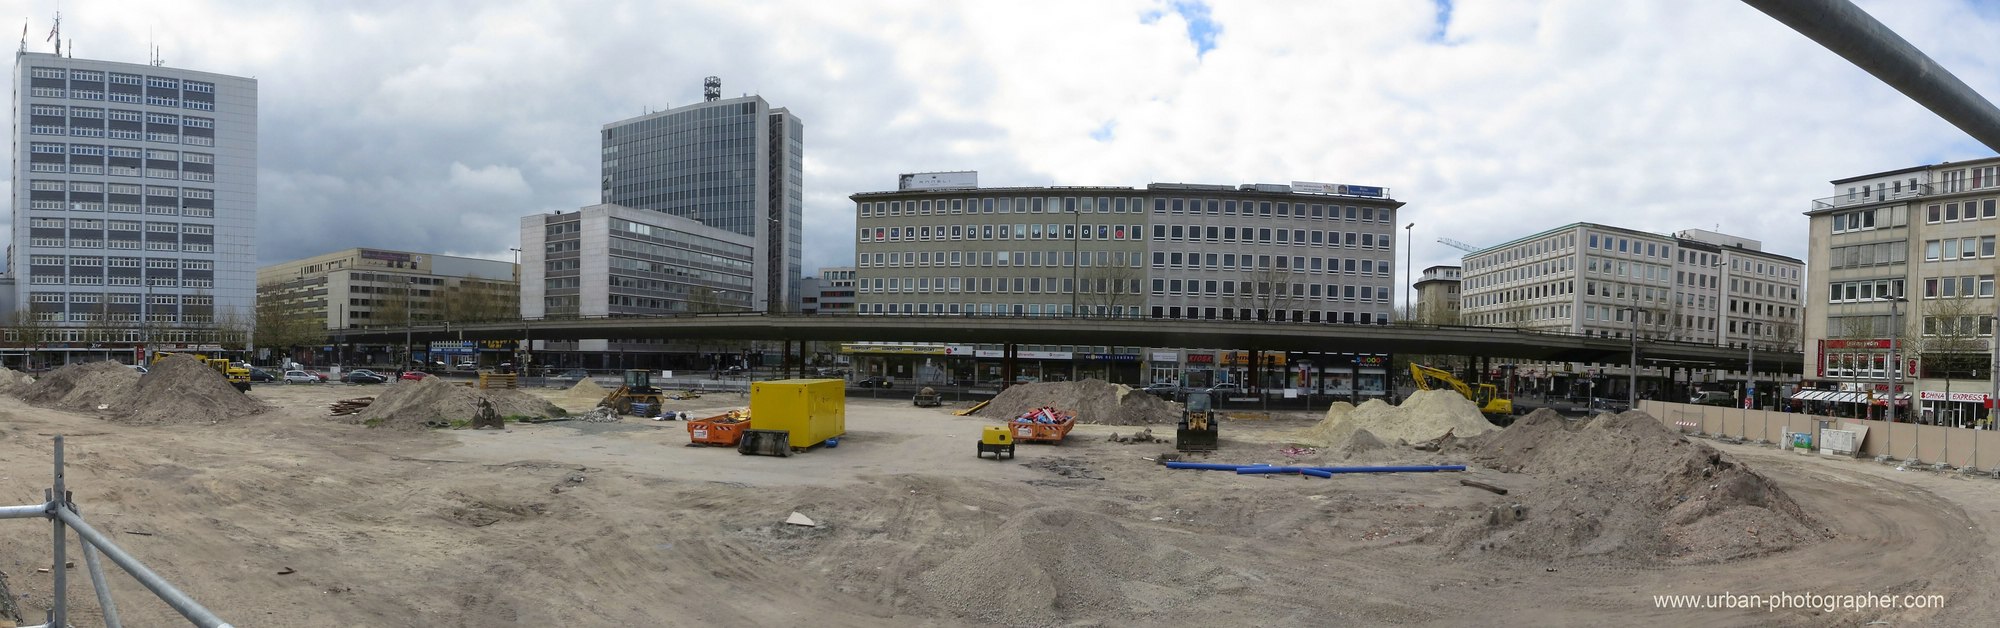 Baustelle Bahnhofsplatz 3